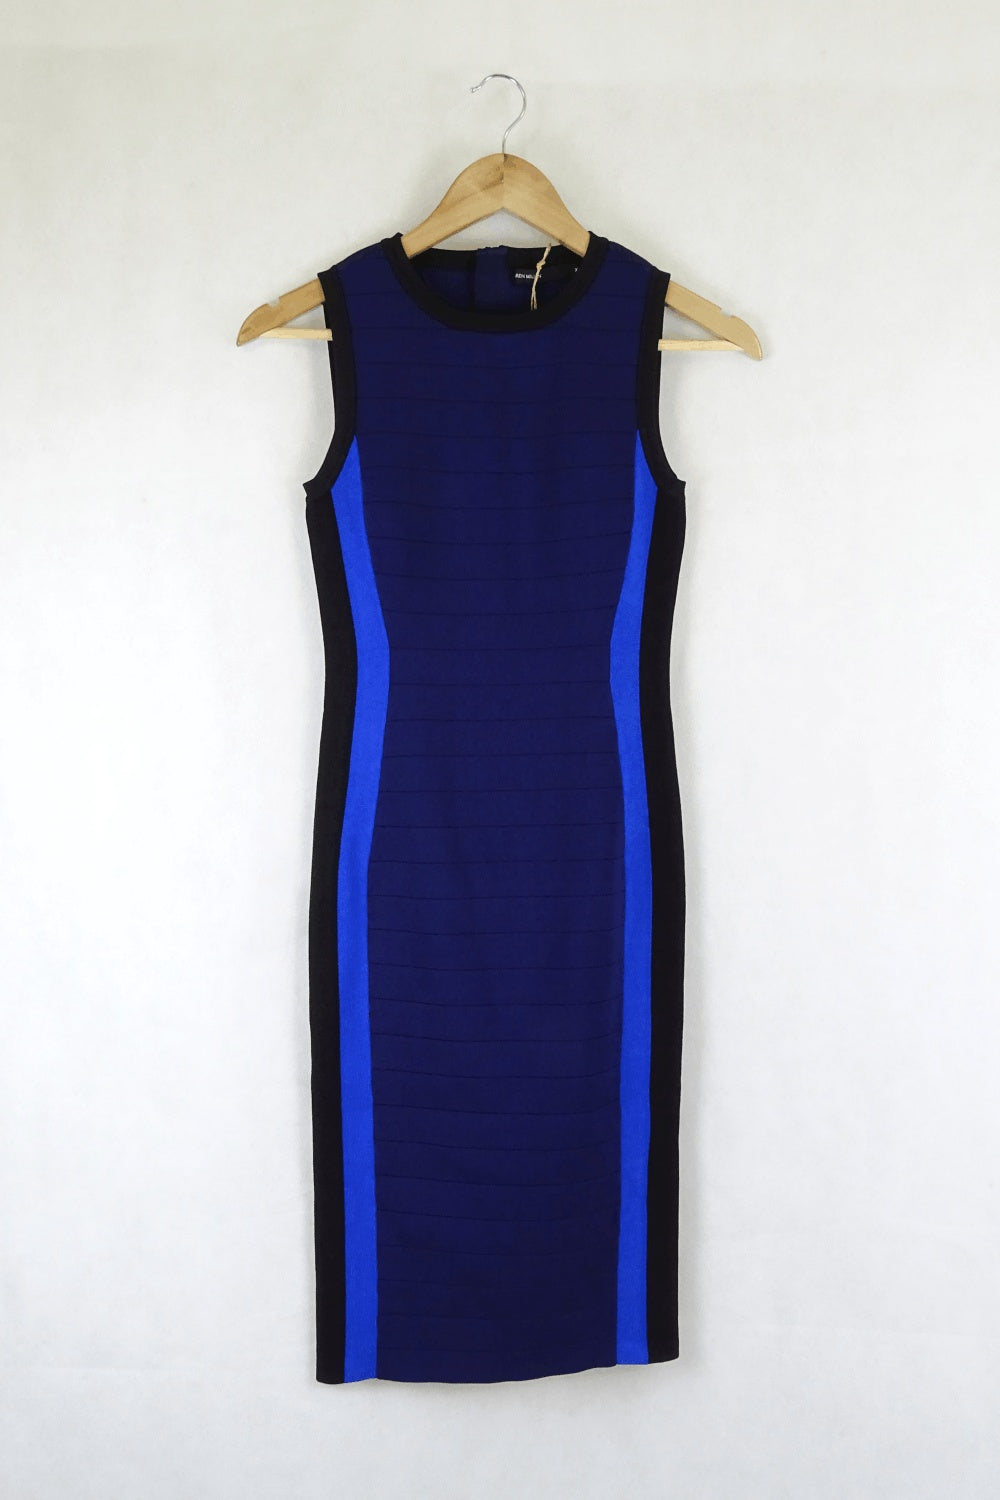 Karen Millen Bodycon Blue Dress XS